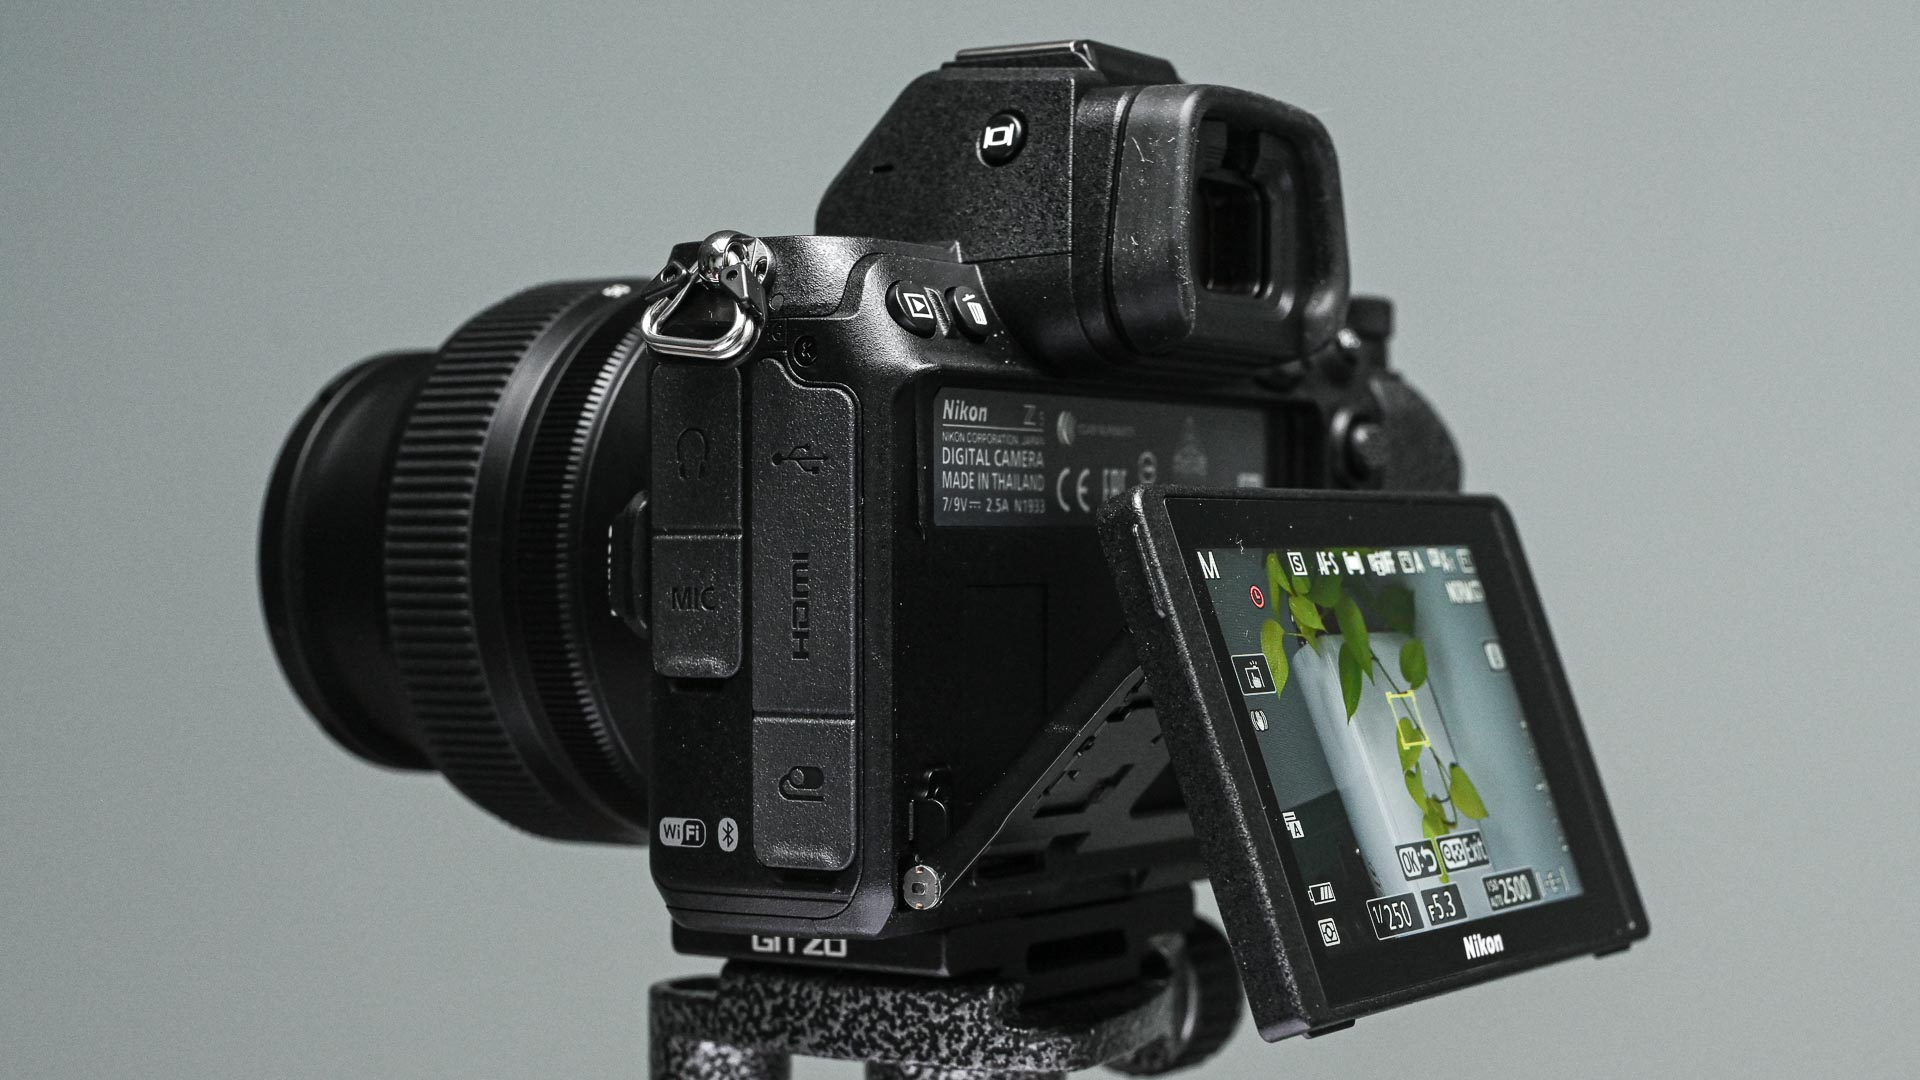 Nikon Z5 tilting screen design